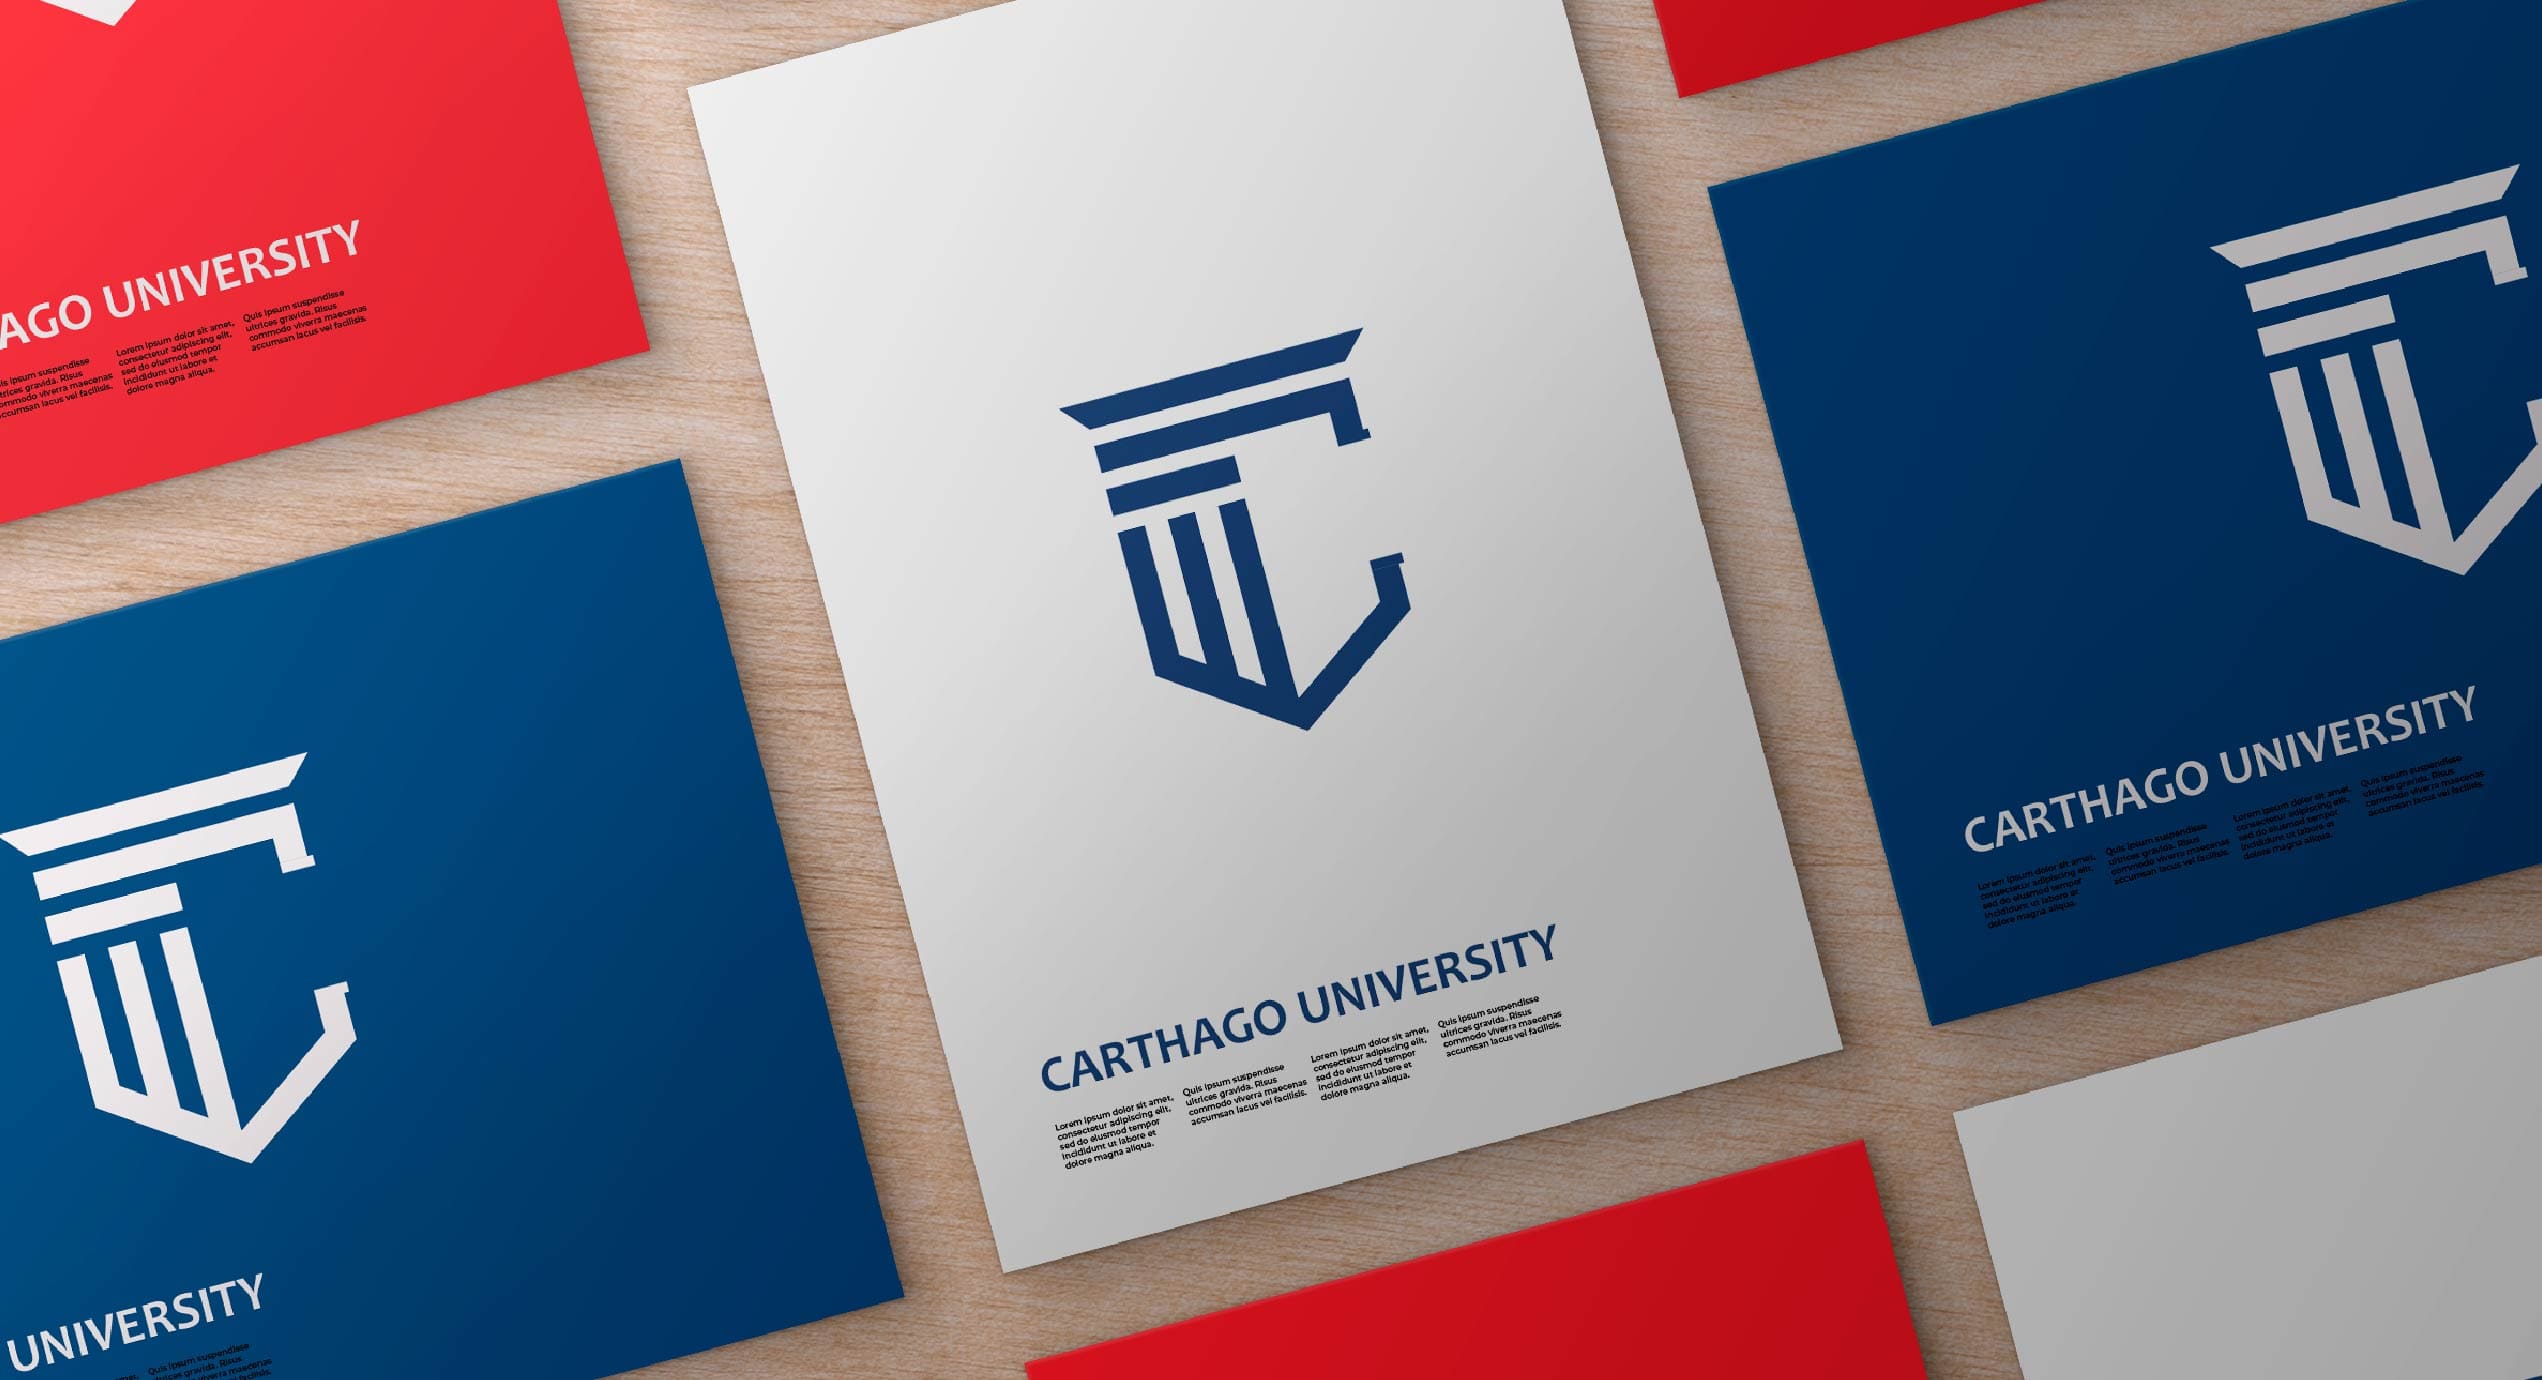 cartago-university-01